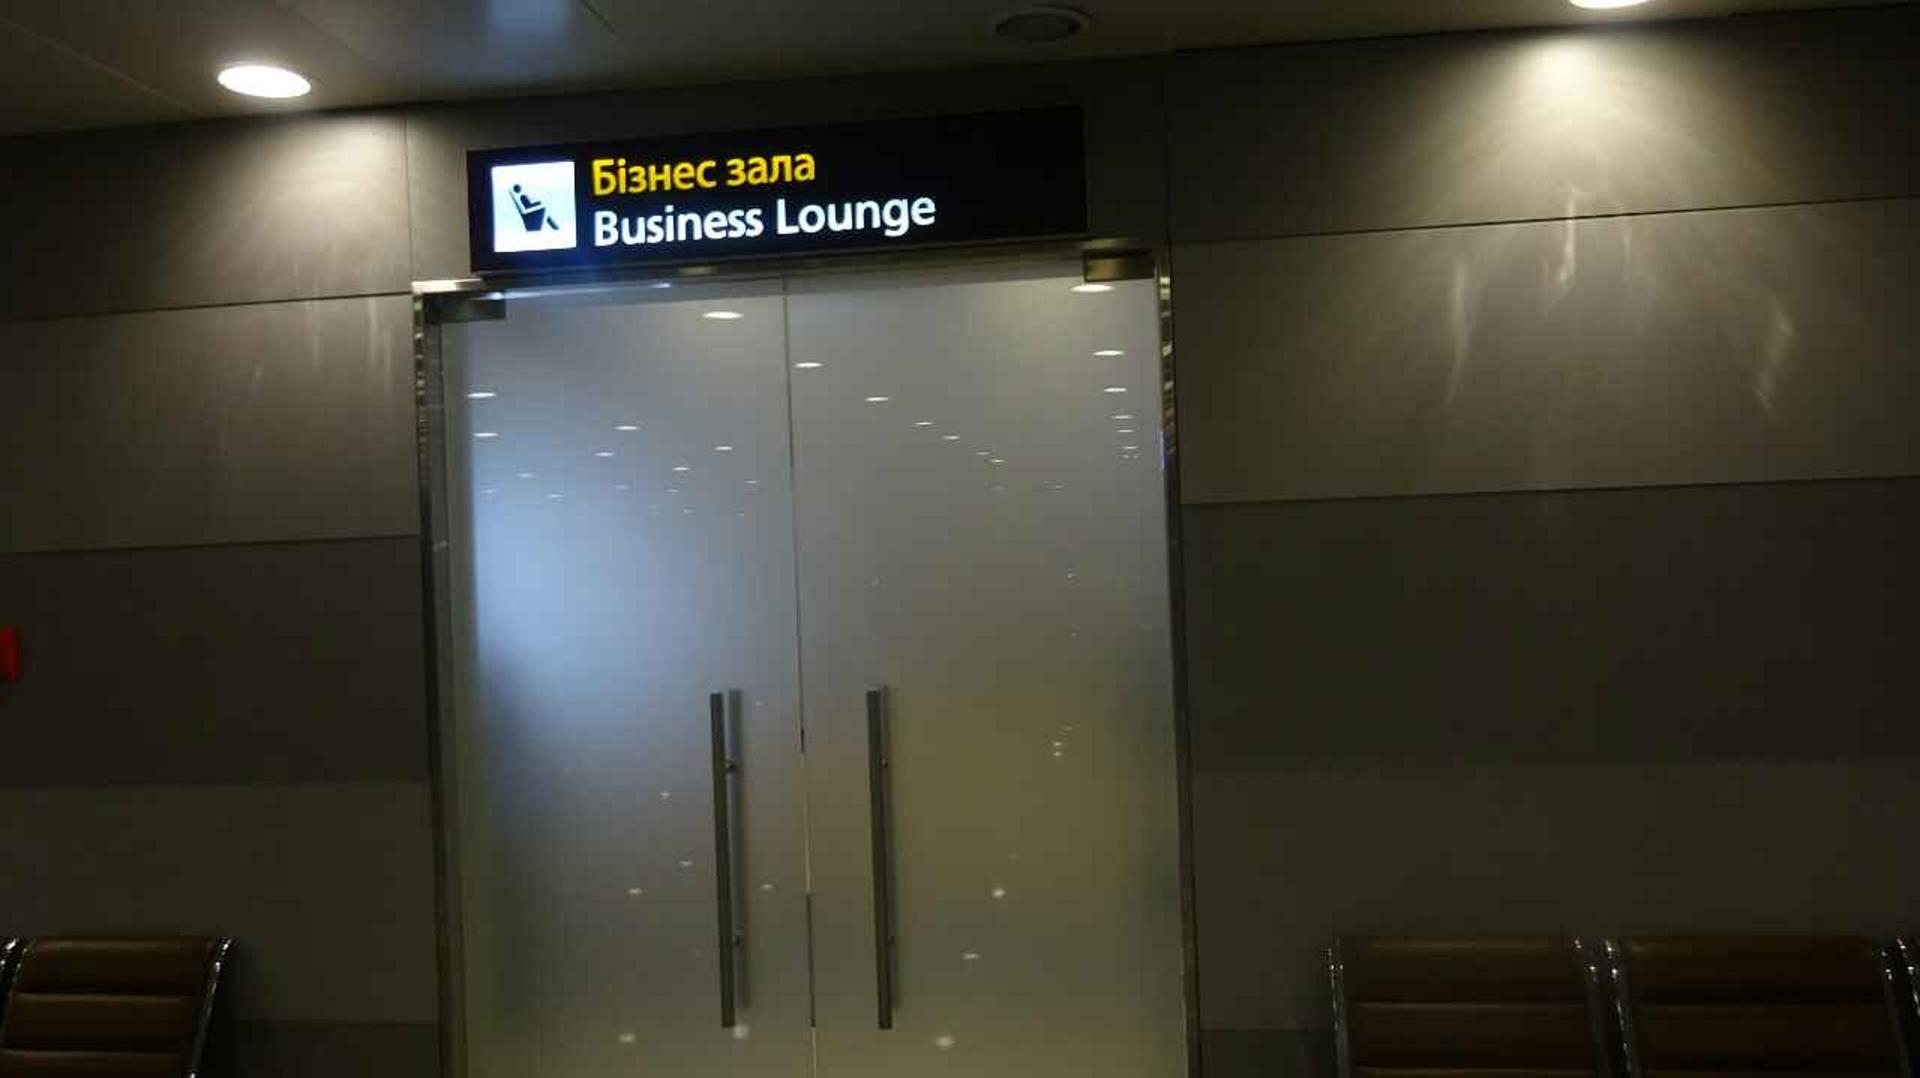 Mastercard Business Lounge image 6 of 36